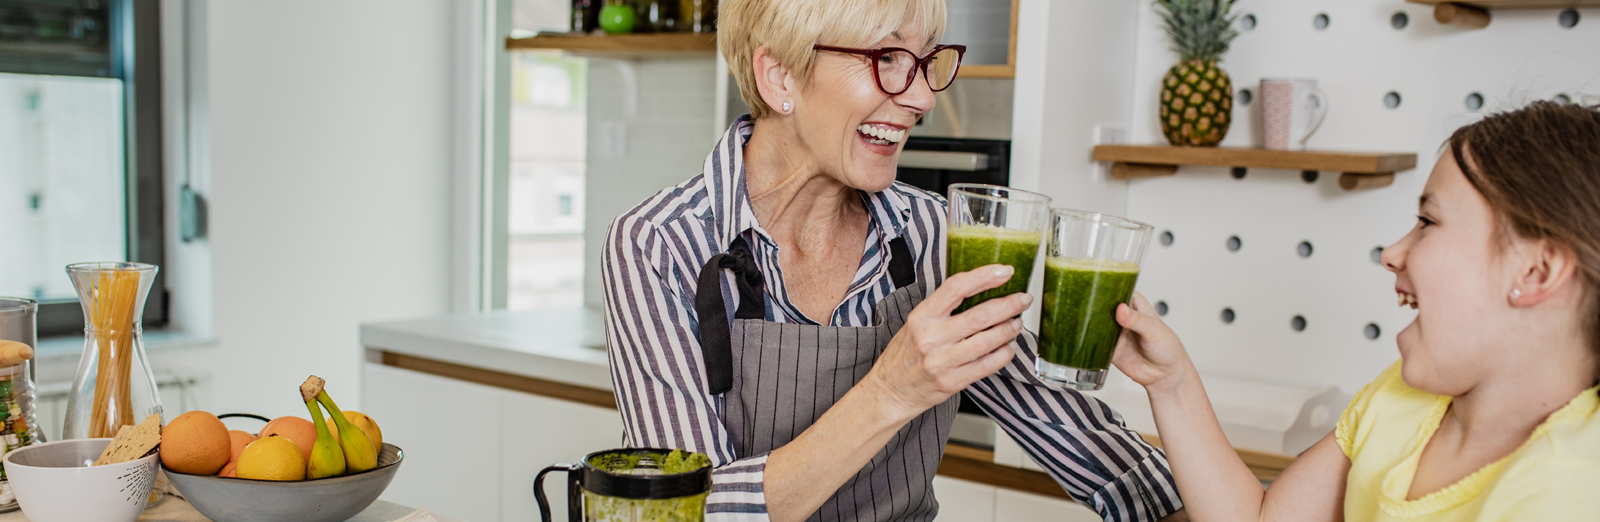 grandmother-drinking-green-smoothie-1600x522.jpg